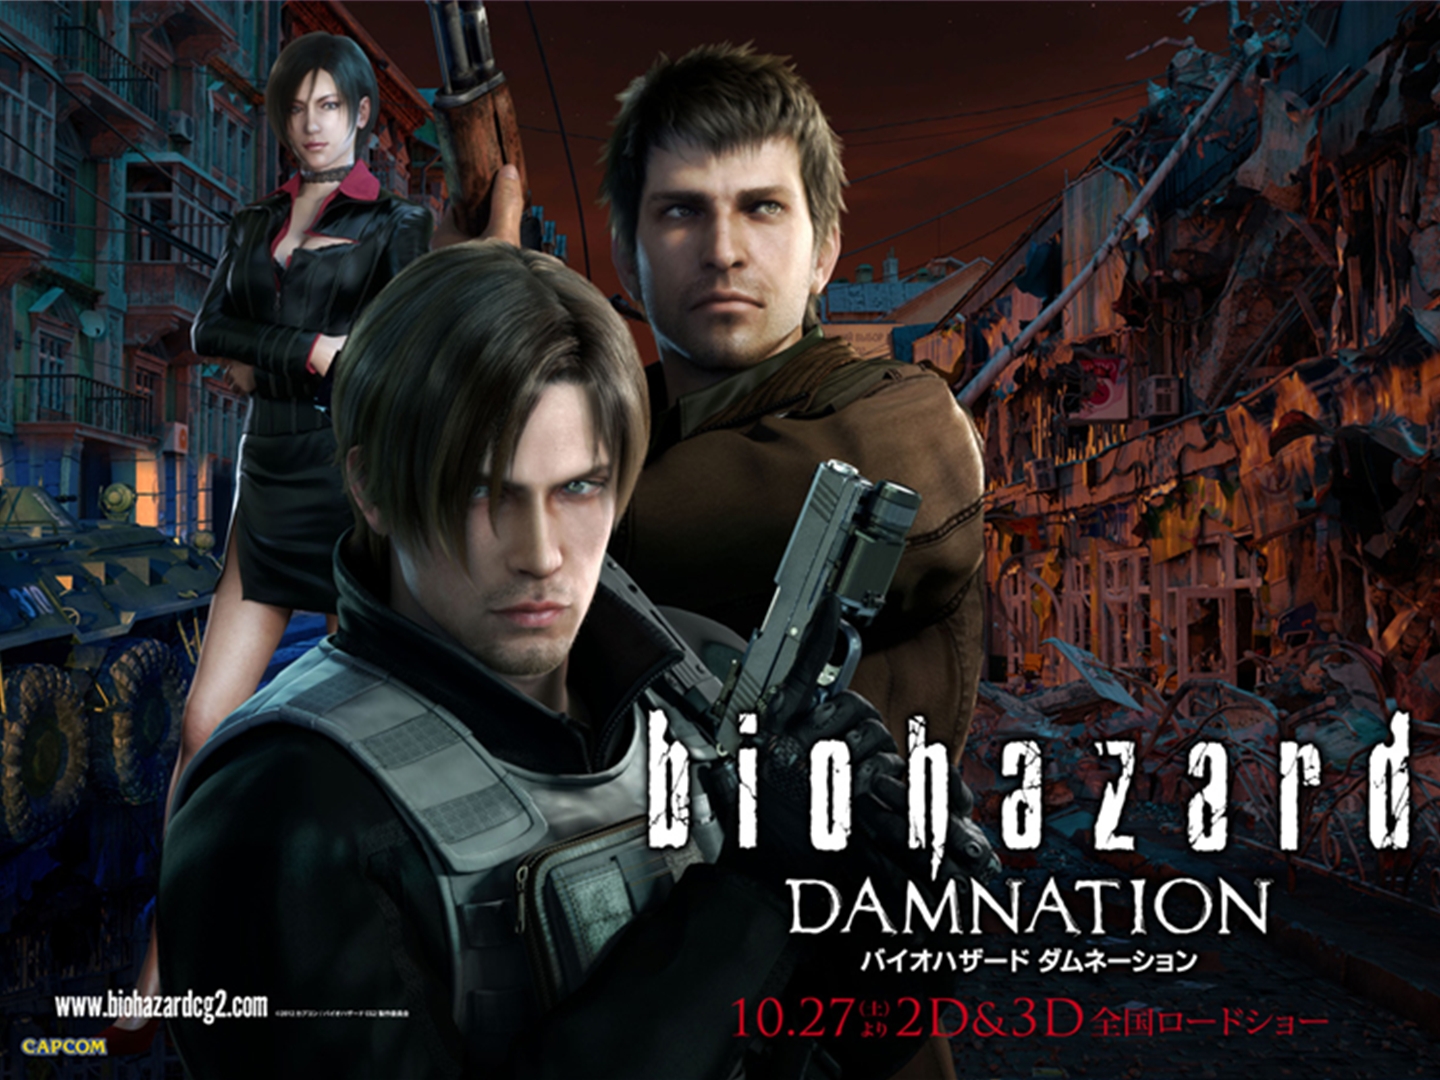 Resident Evil: Damnation Wallpapers